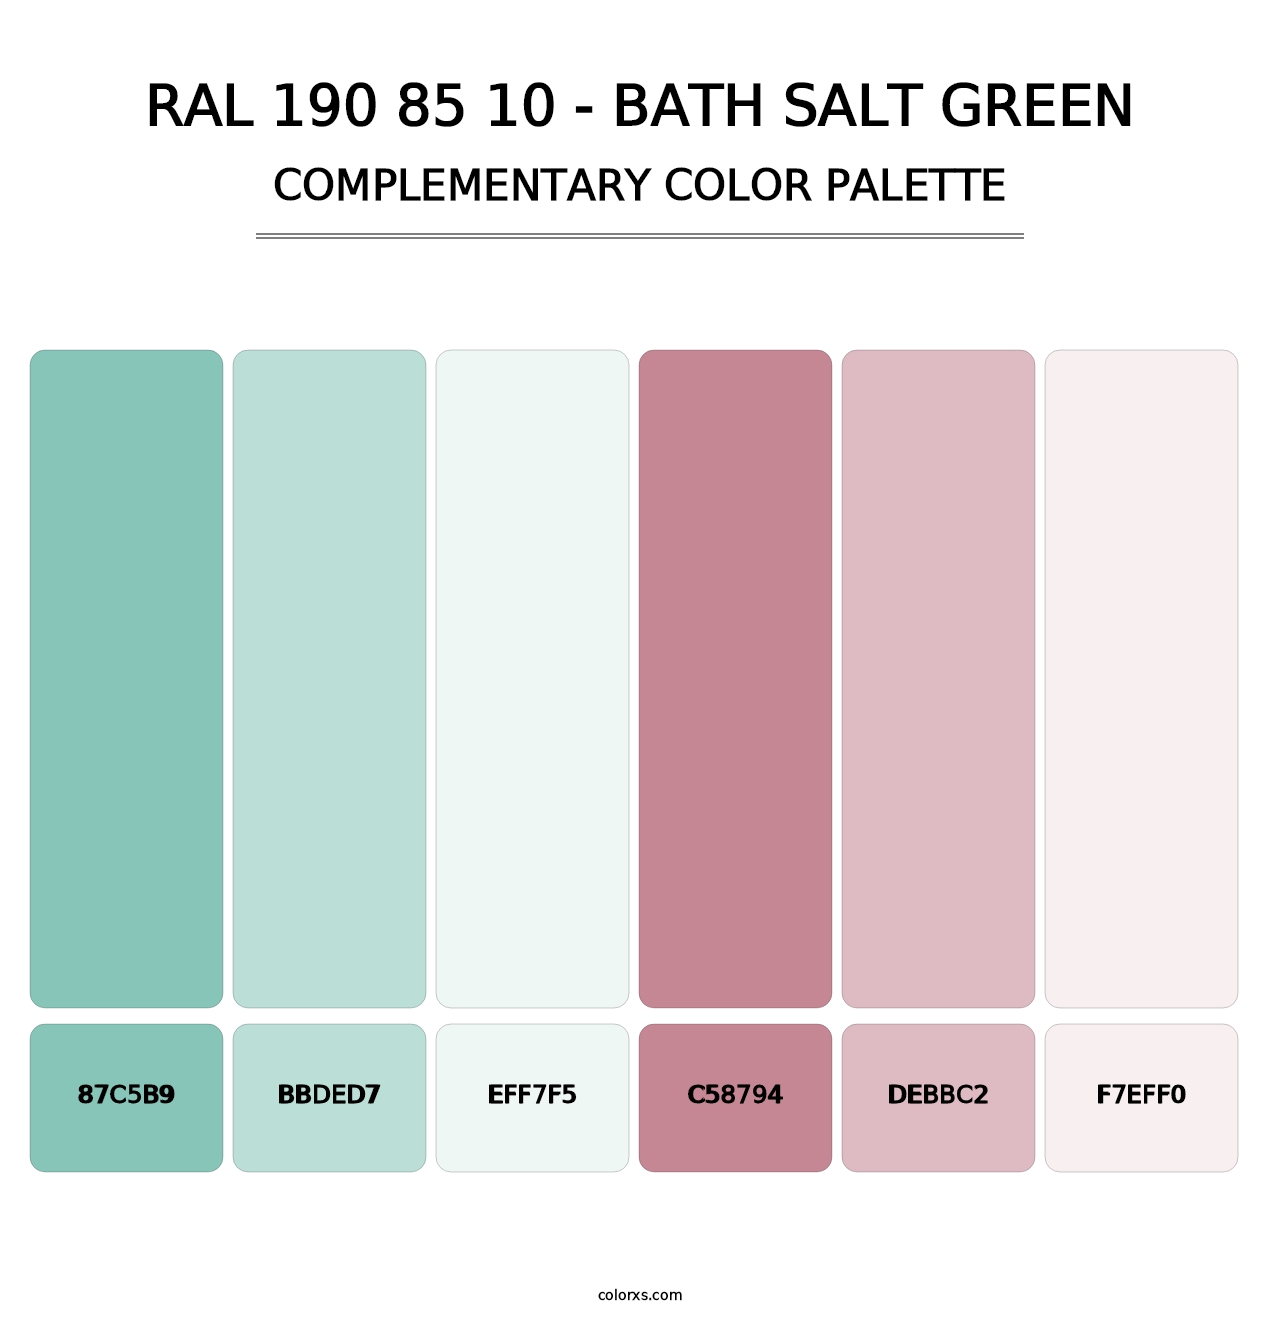 RAL 190 85 10 - Bath Salt Green - Complementary Color Palette